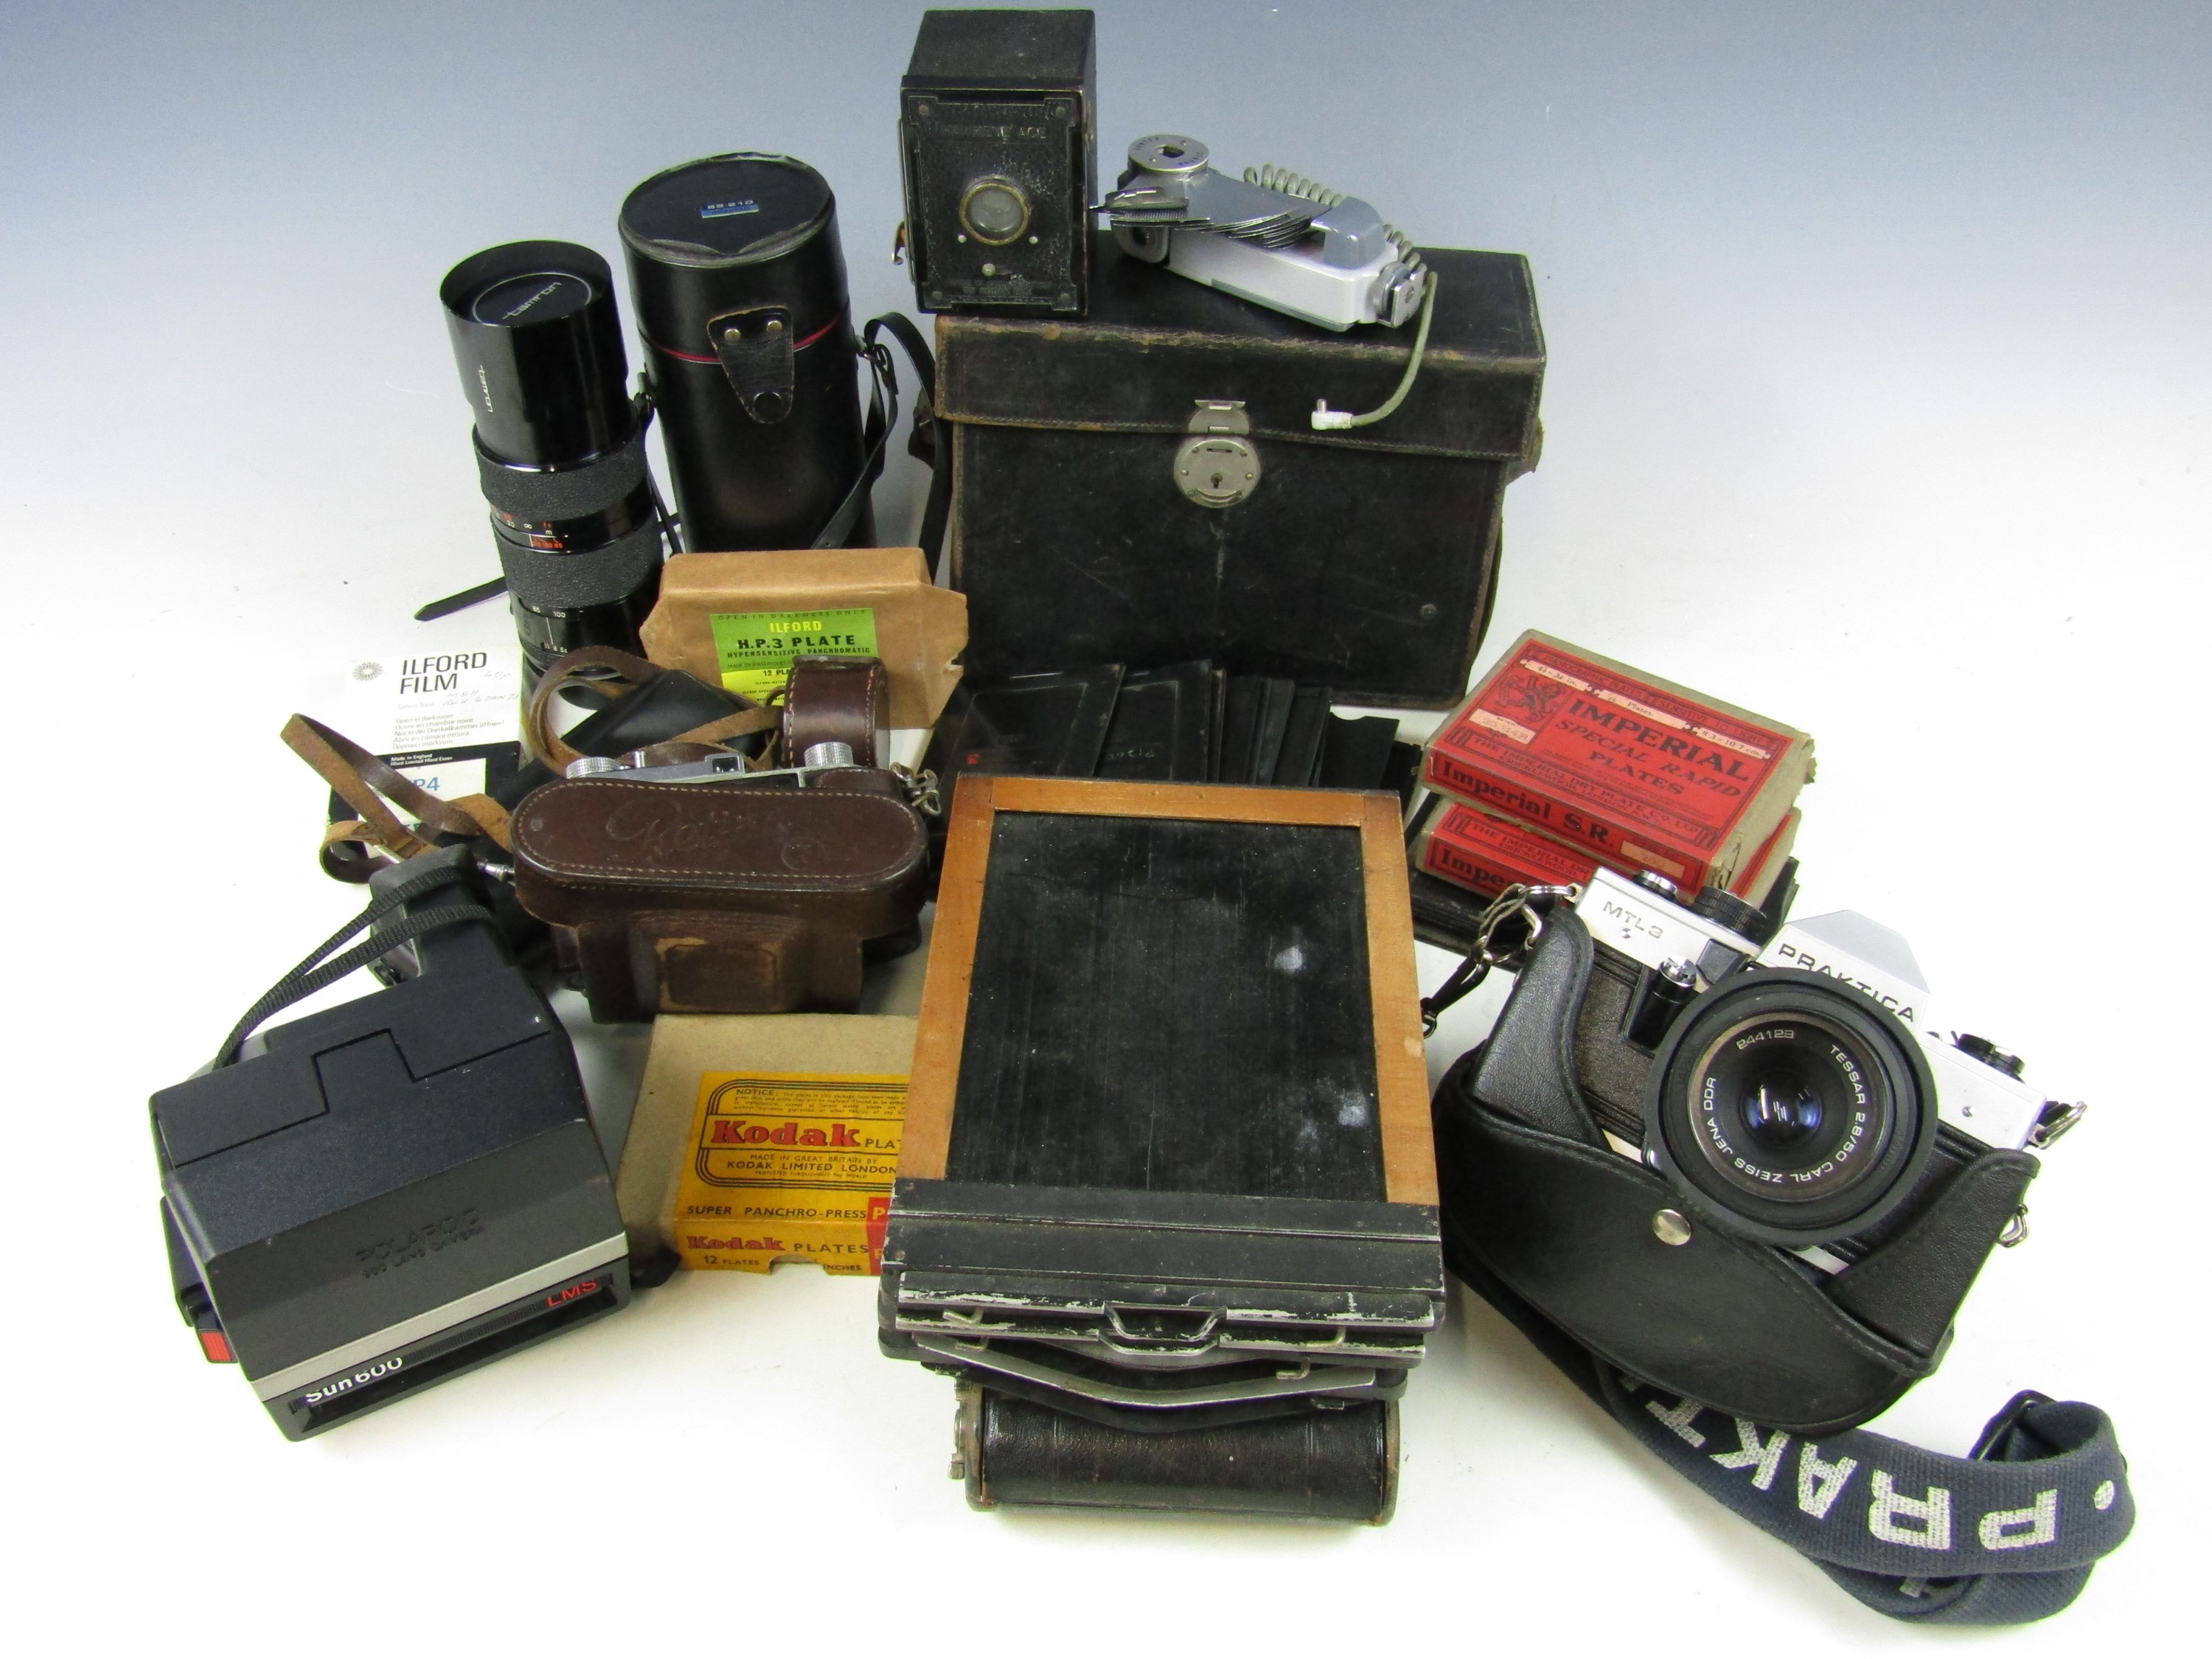 A quantity of cameras including a Praktica MTL3, Lens Tamrun 85 - 210mm zoom, Hawkeye Ace, folding